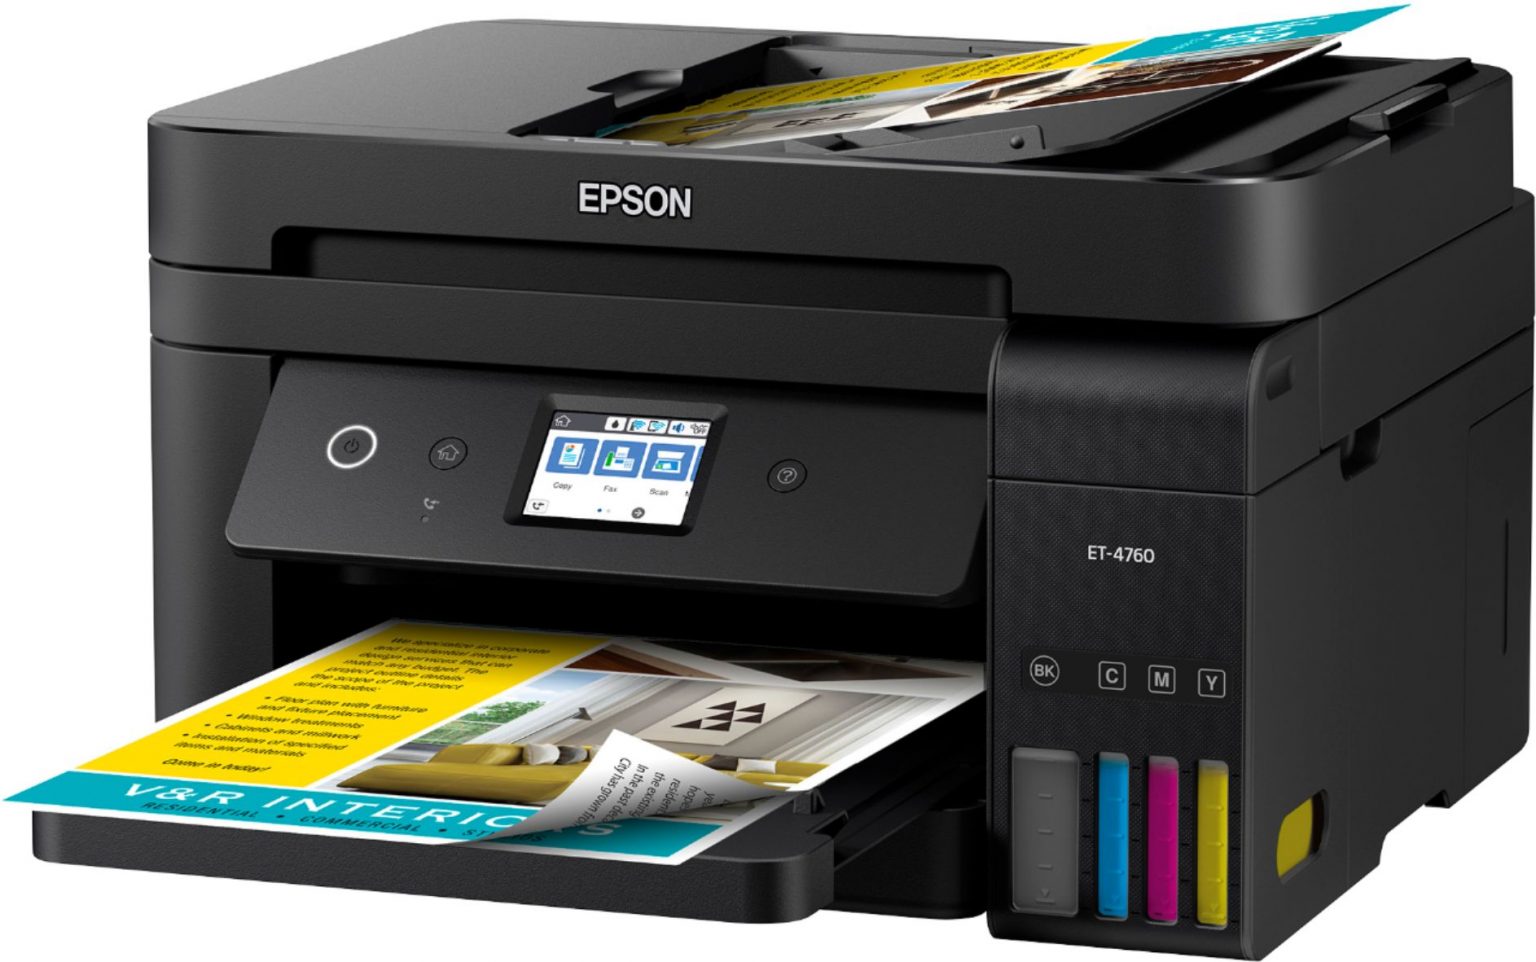 Epson Ecotank Et 4760 All In One Printer Dreams4less 2986